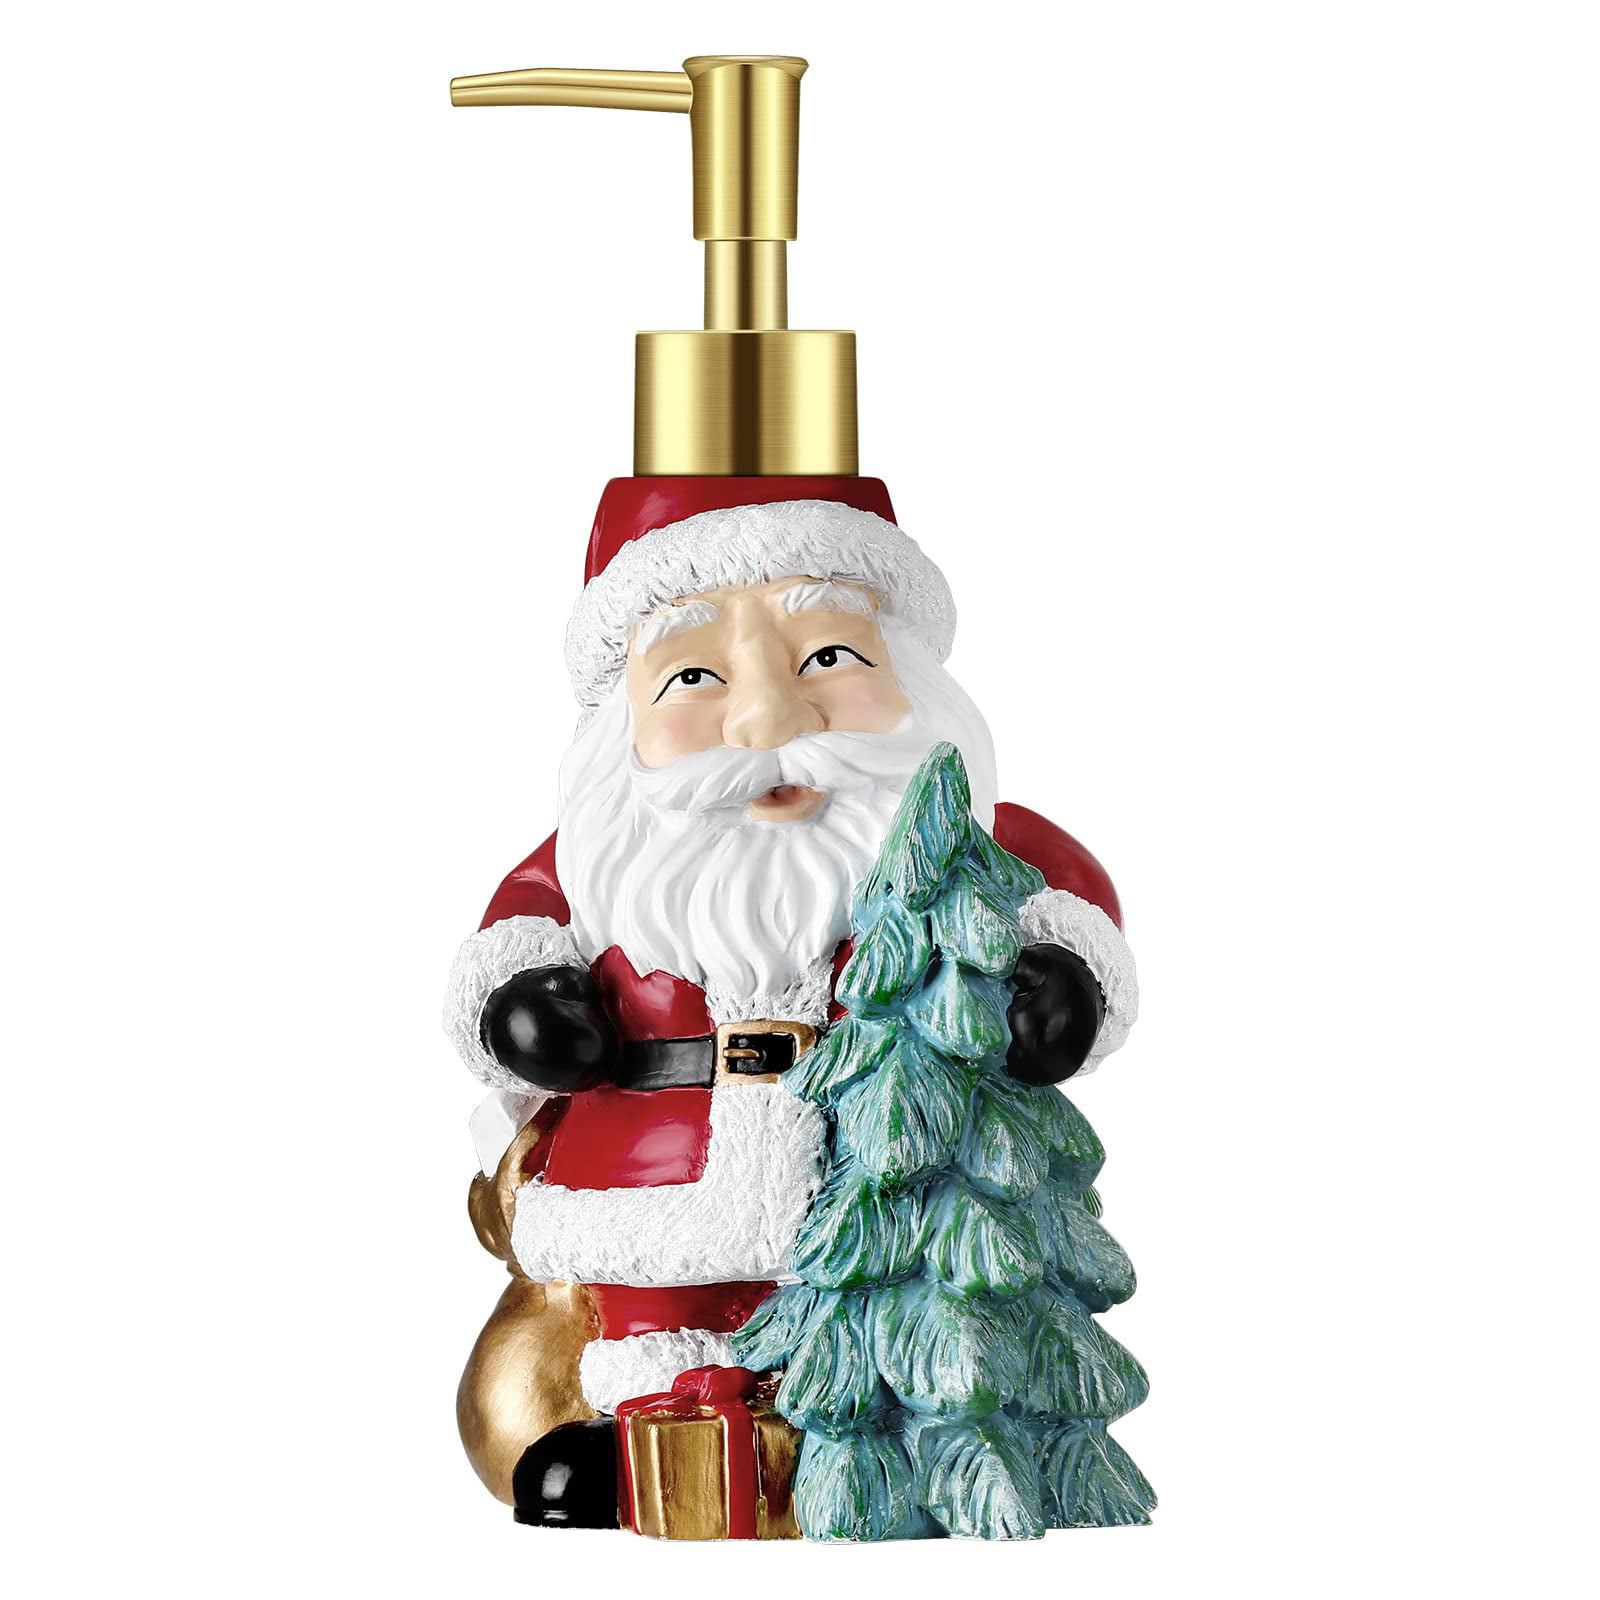 Fun Neighbor Christmas Gift with Hand Sanitizer – Fun-Squared